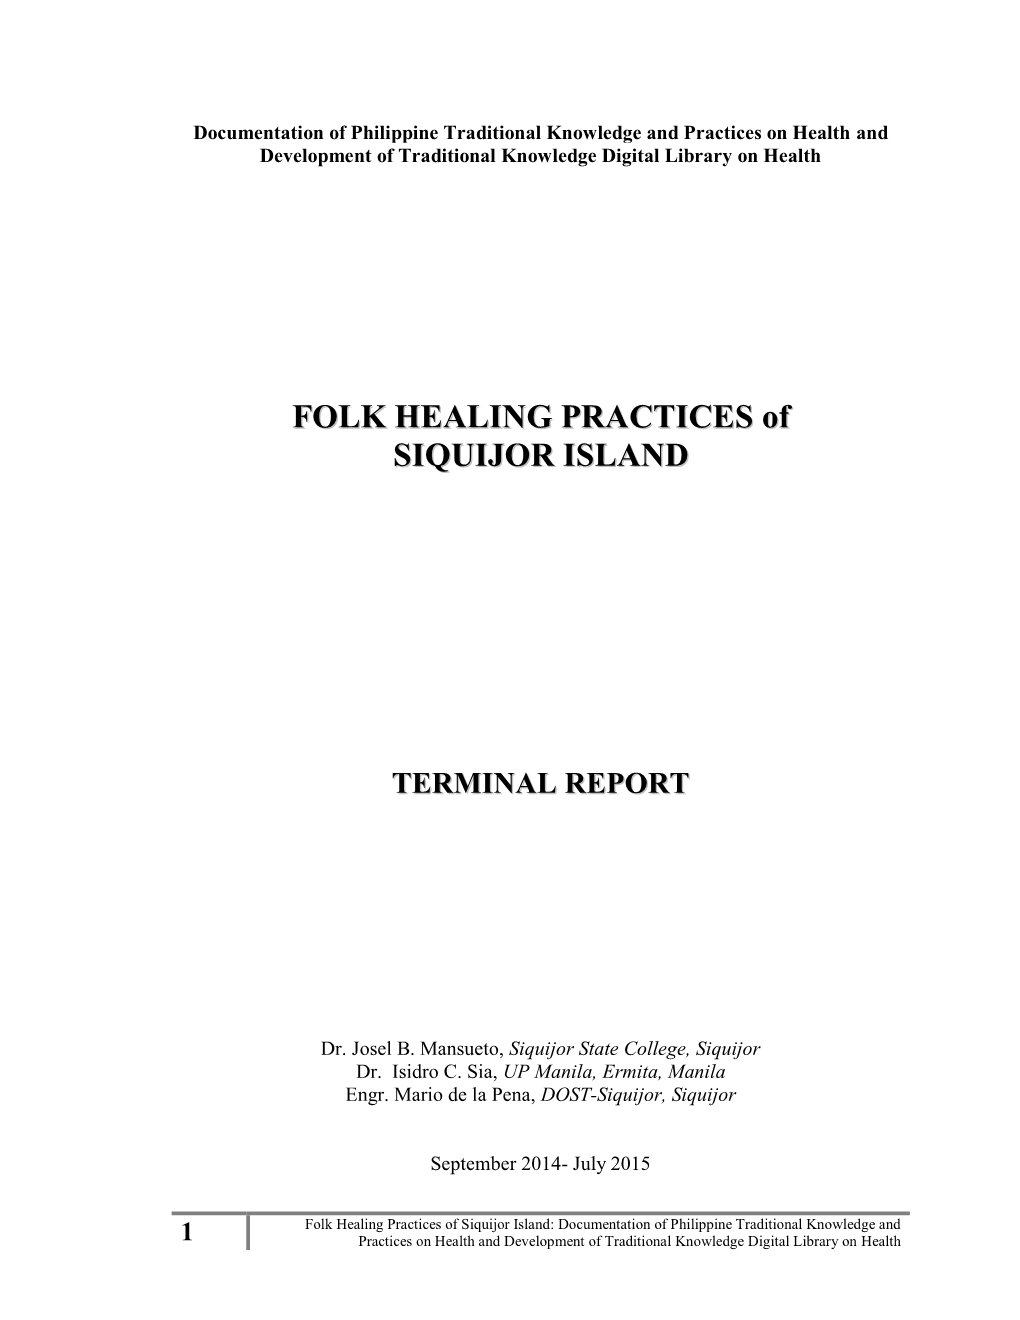 FOLK HEALING PRACTICES of SIQUIJOR ISLAND